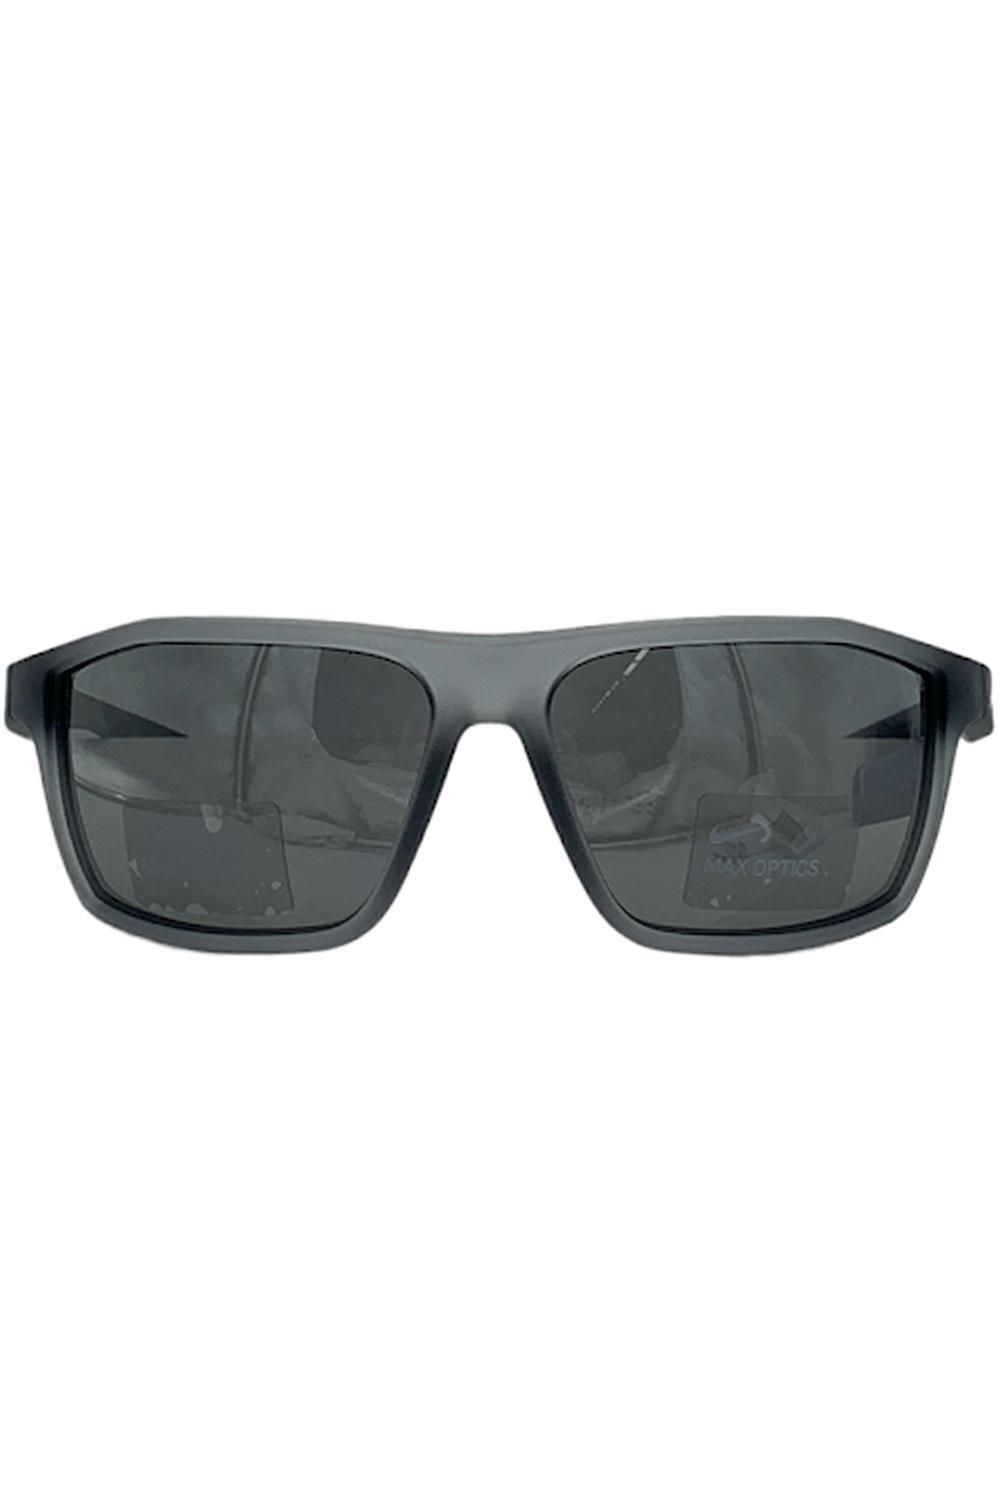 Nike LEGEND-S-EV1061-001-6014 60mm New Sunglasses